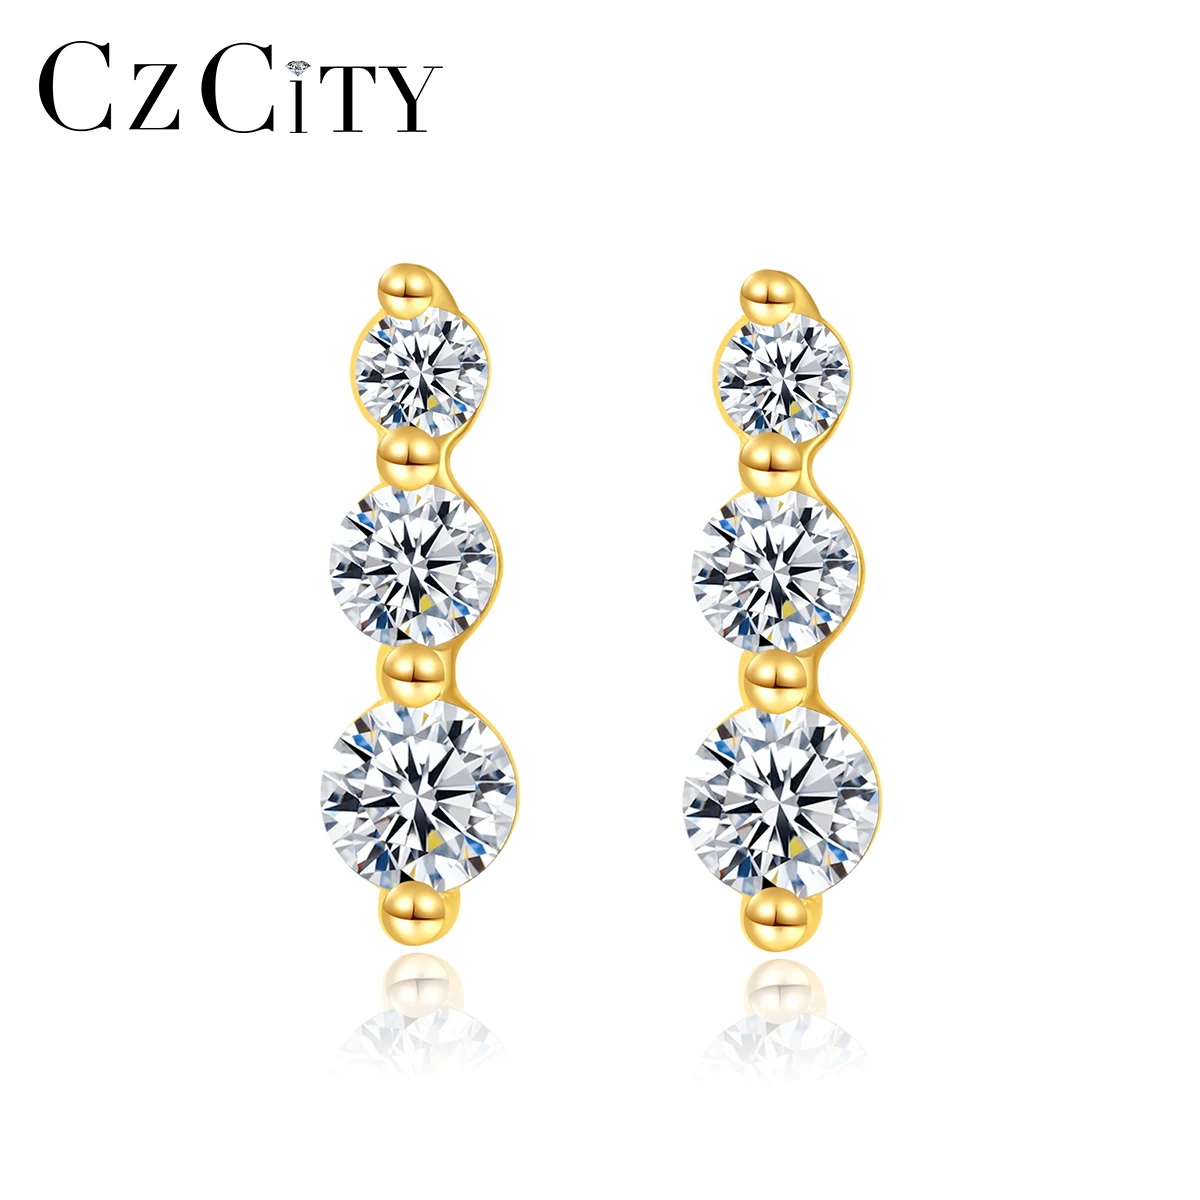 

CZCITY Fashion Round Statement CZ Stud Earrings for Women Fine Jewelry 925 Sterling Silver Pendientes Femme Bijoux Wedding Gifts